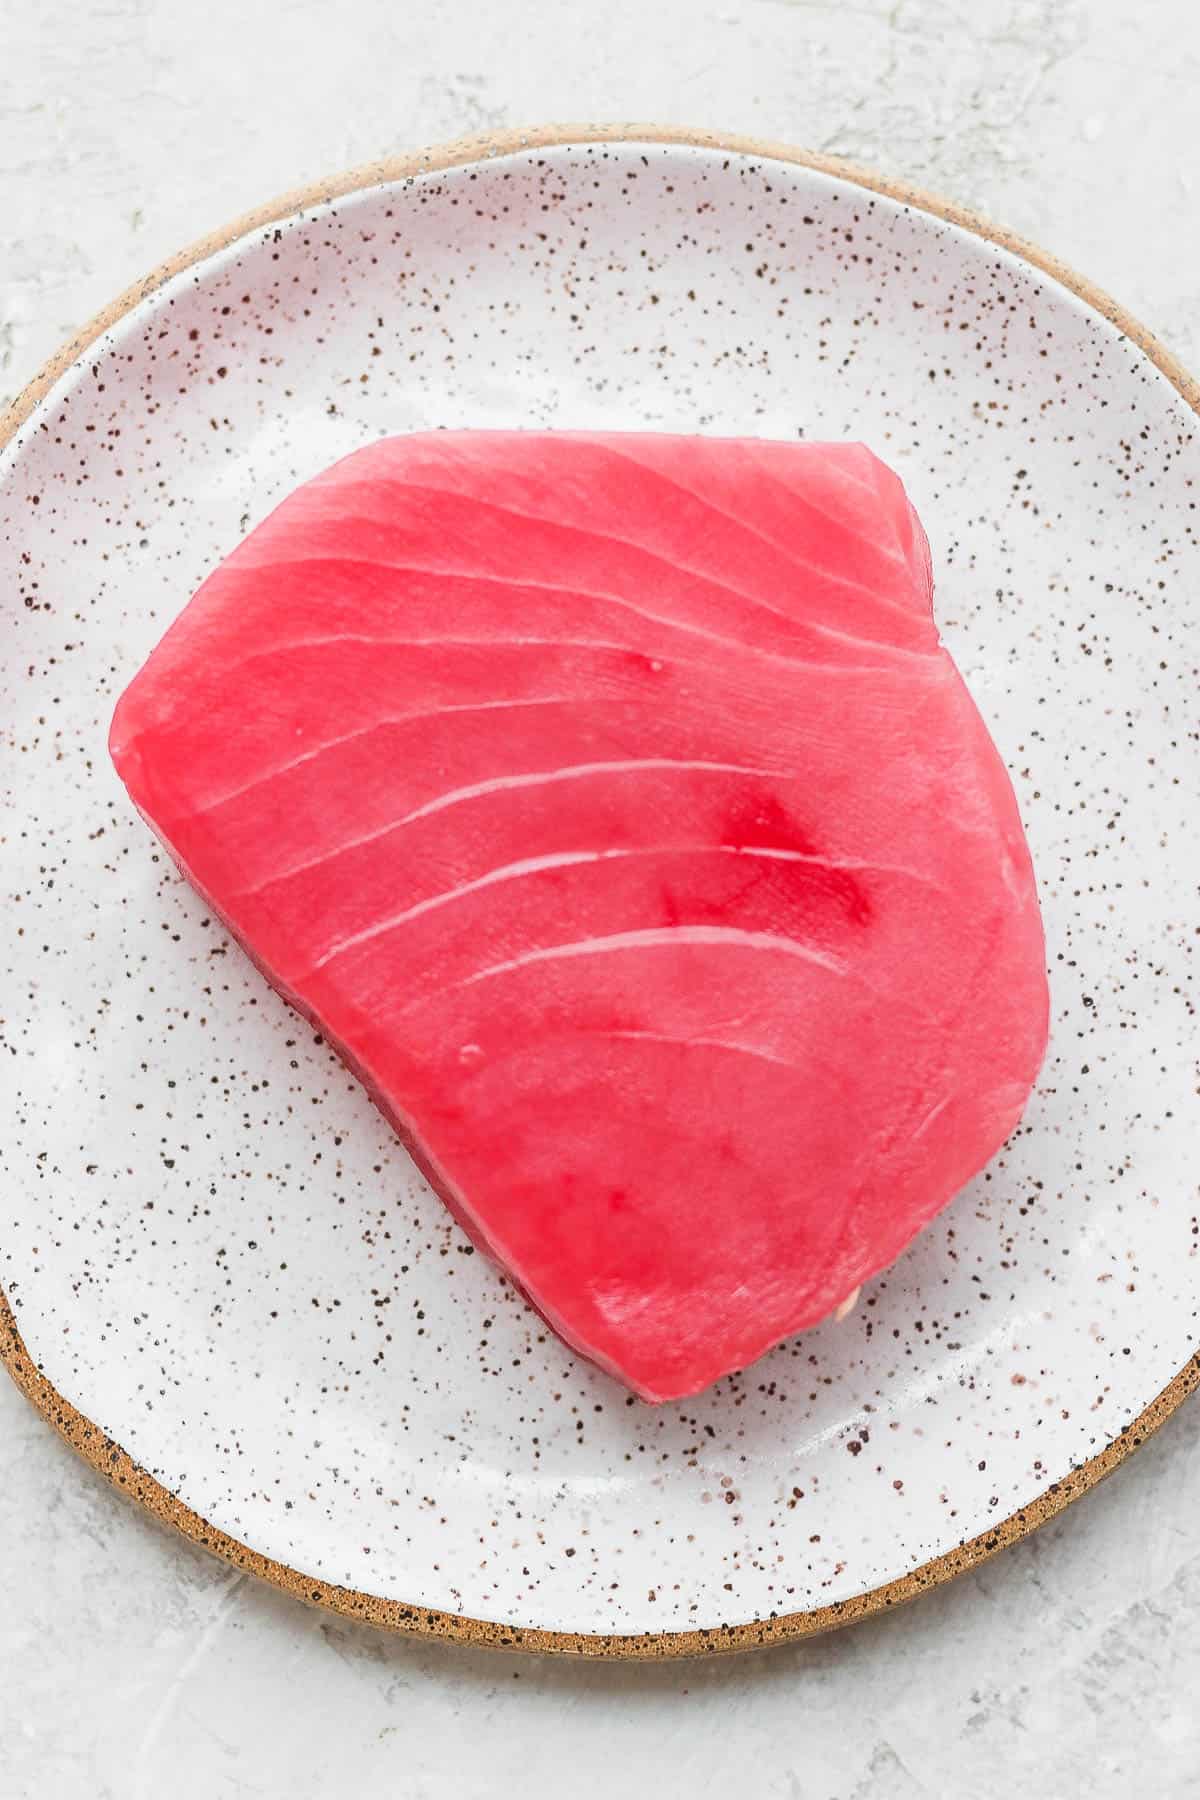 A piece of raw ahi tuna on a plate. 